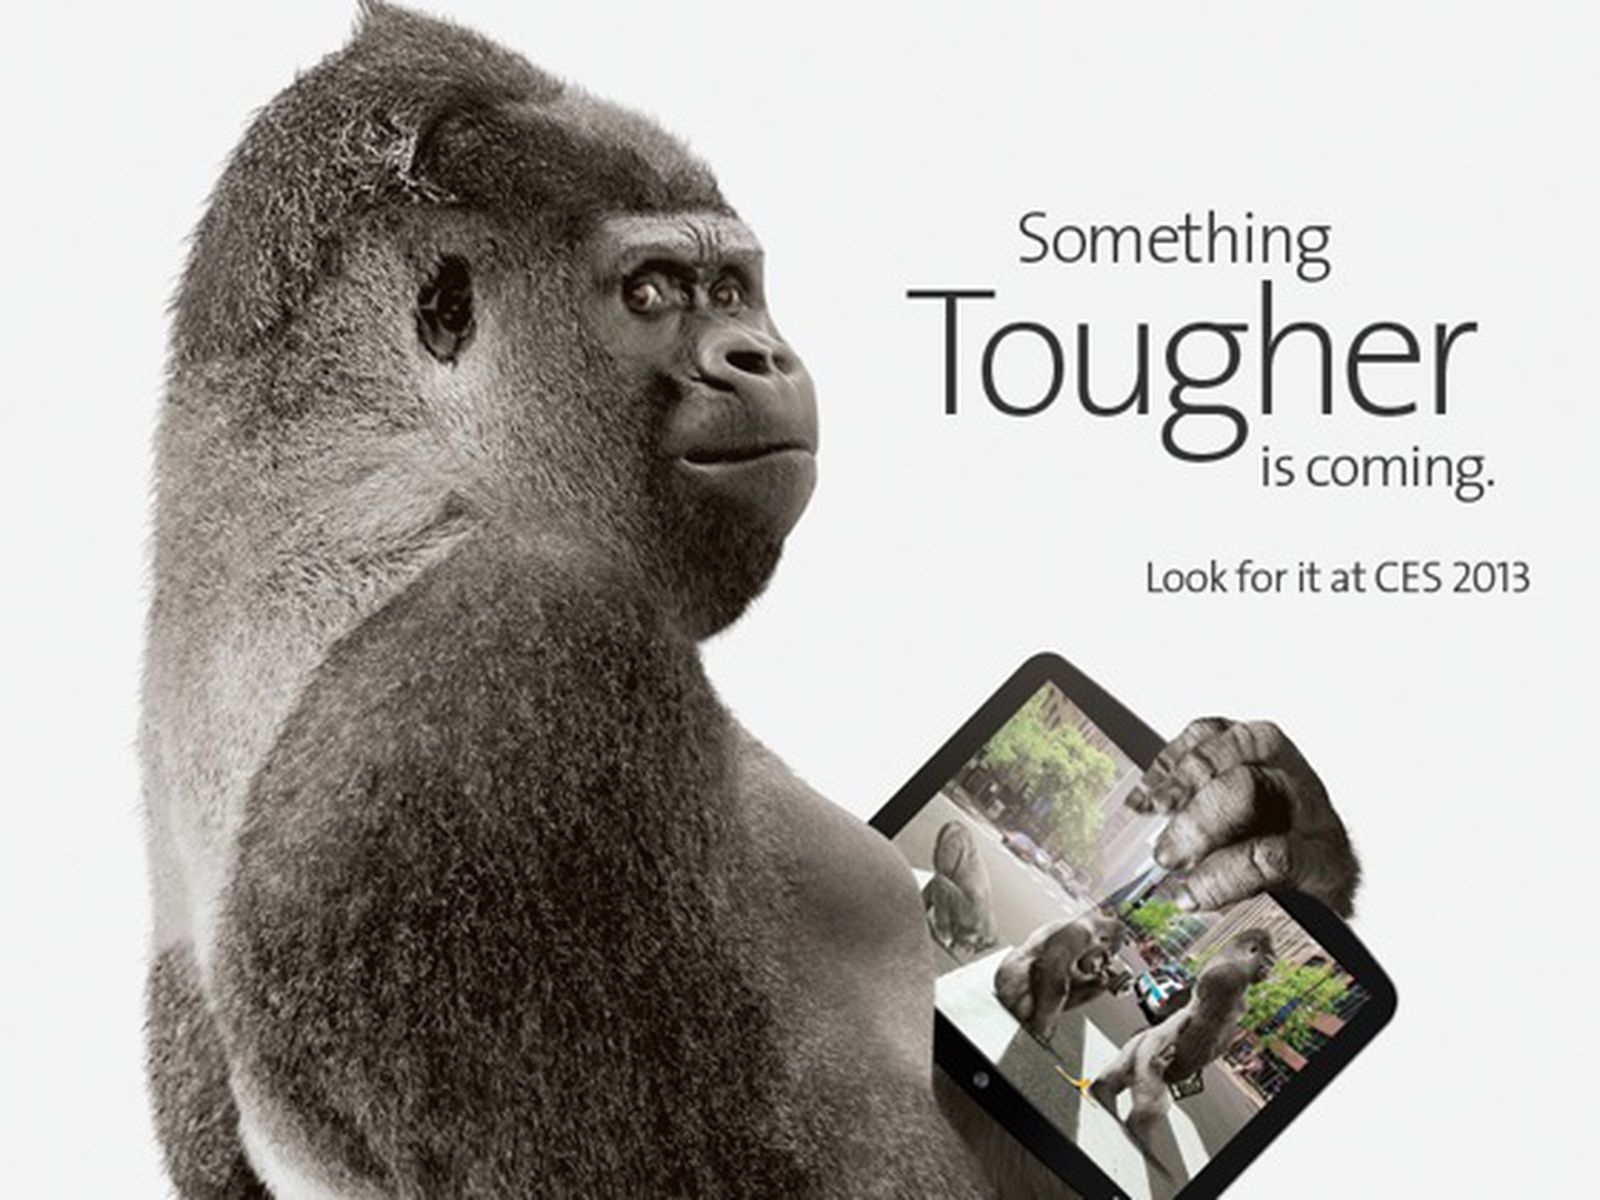 Do iPads have Gorilla Glass?